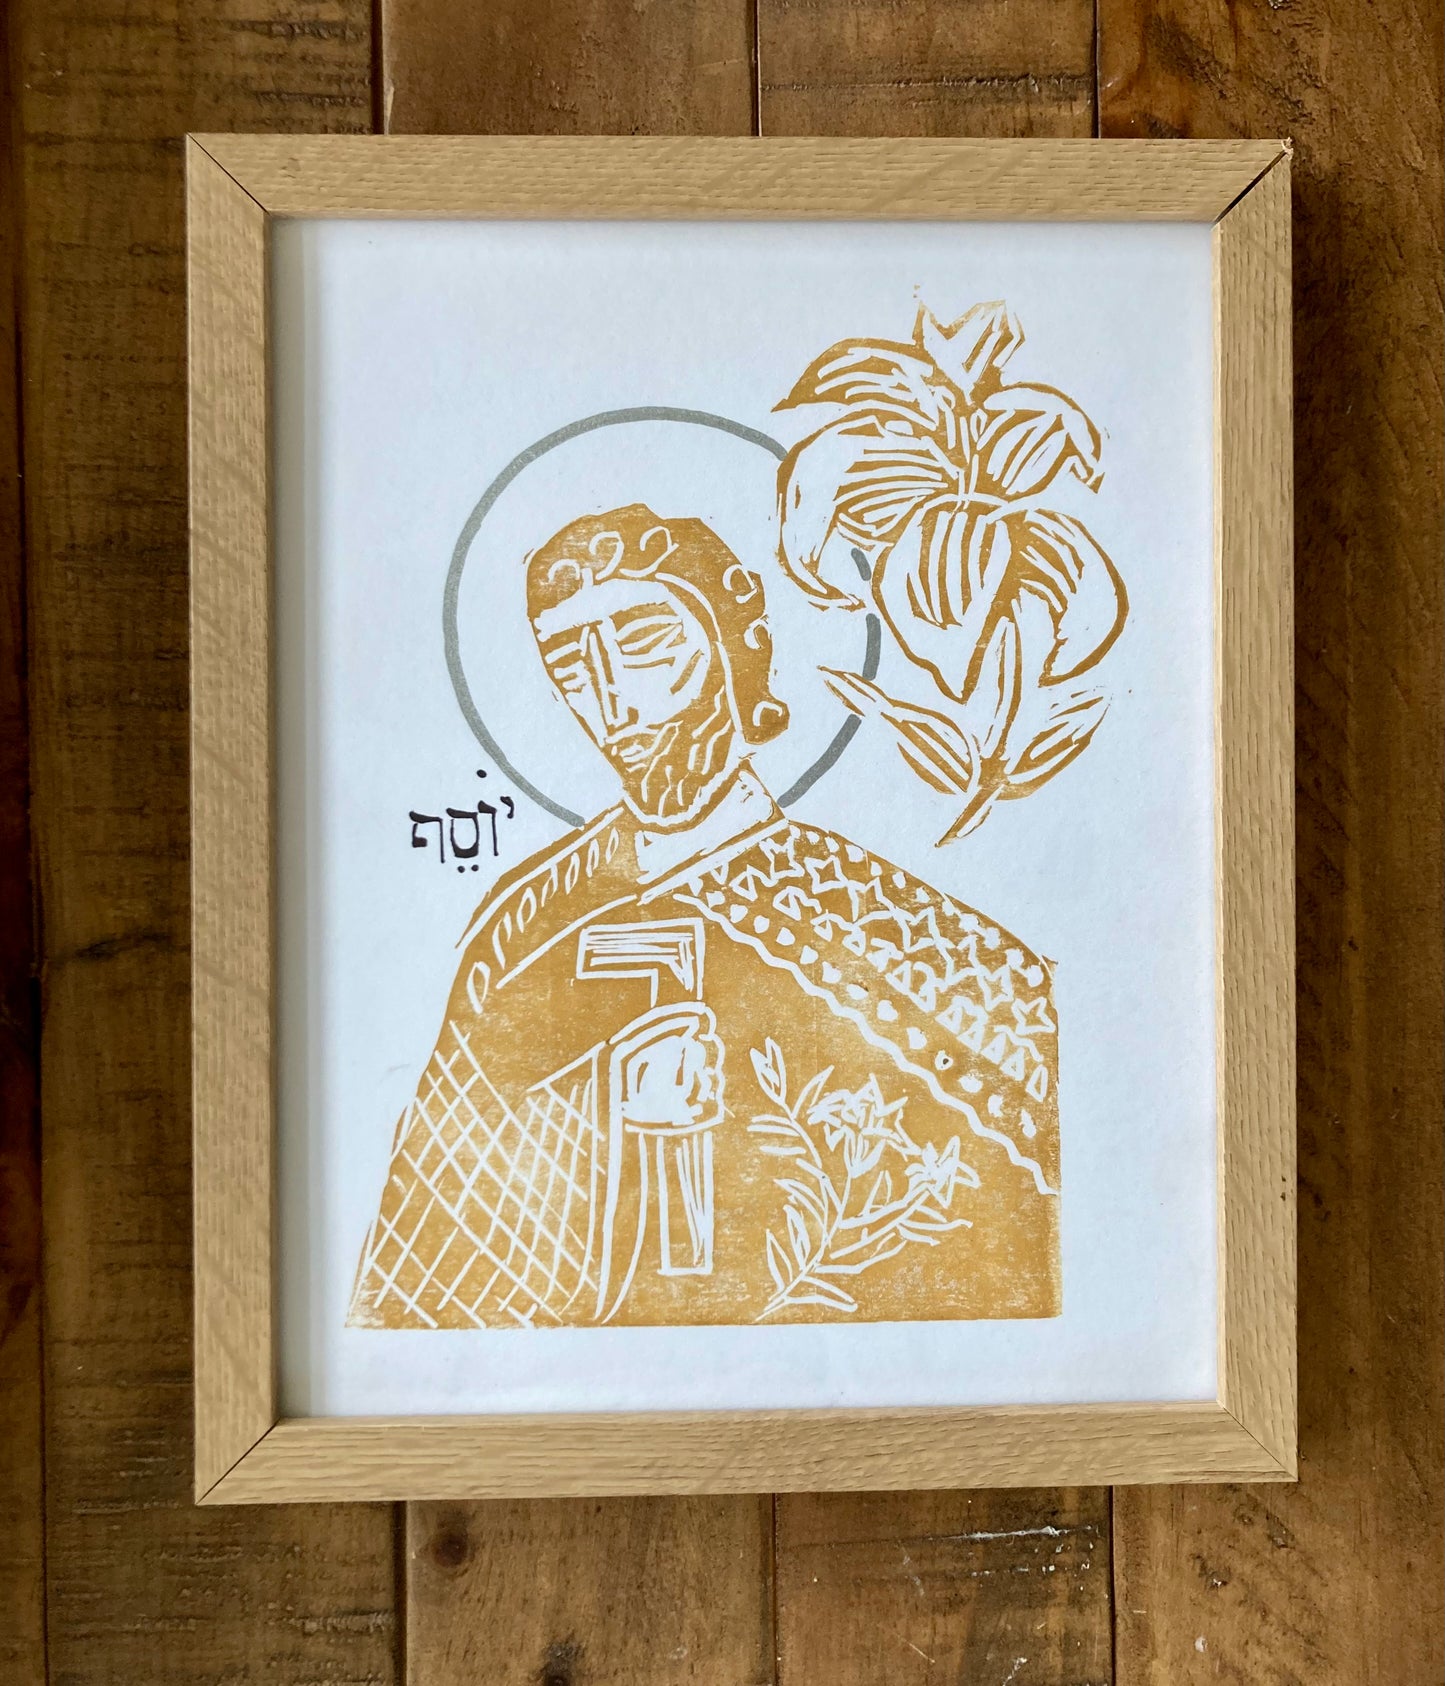 1. St.Joseph Golden linocut/block print